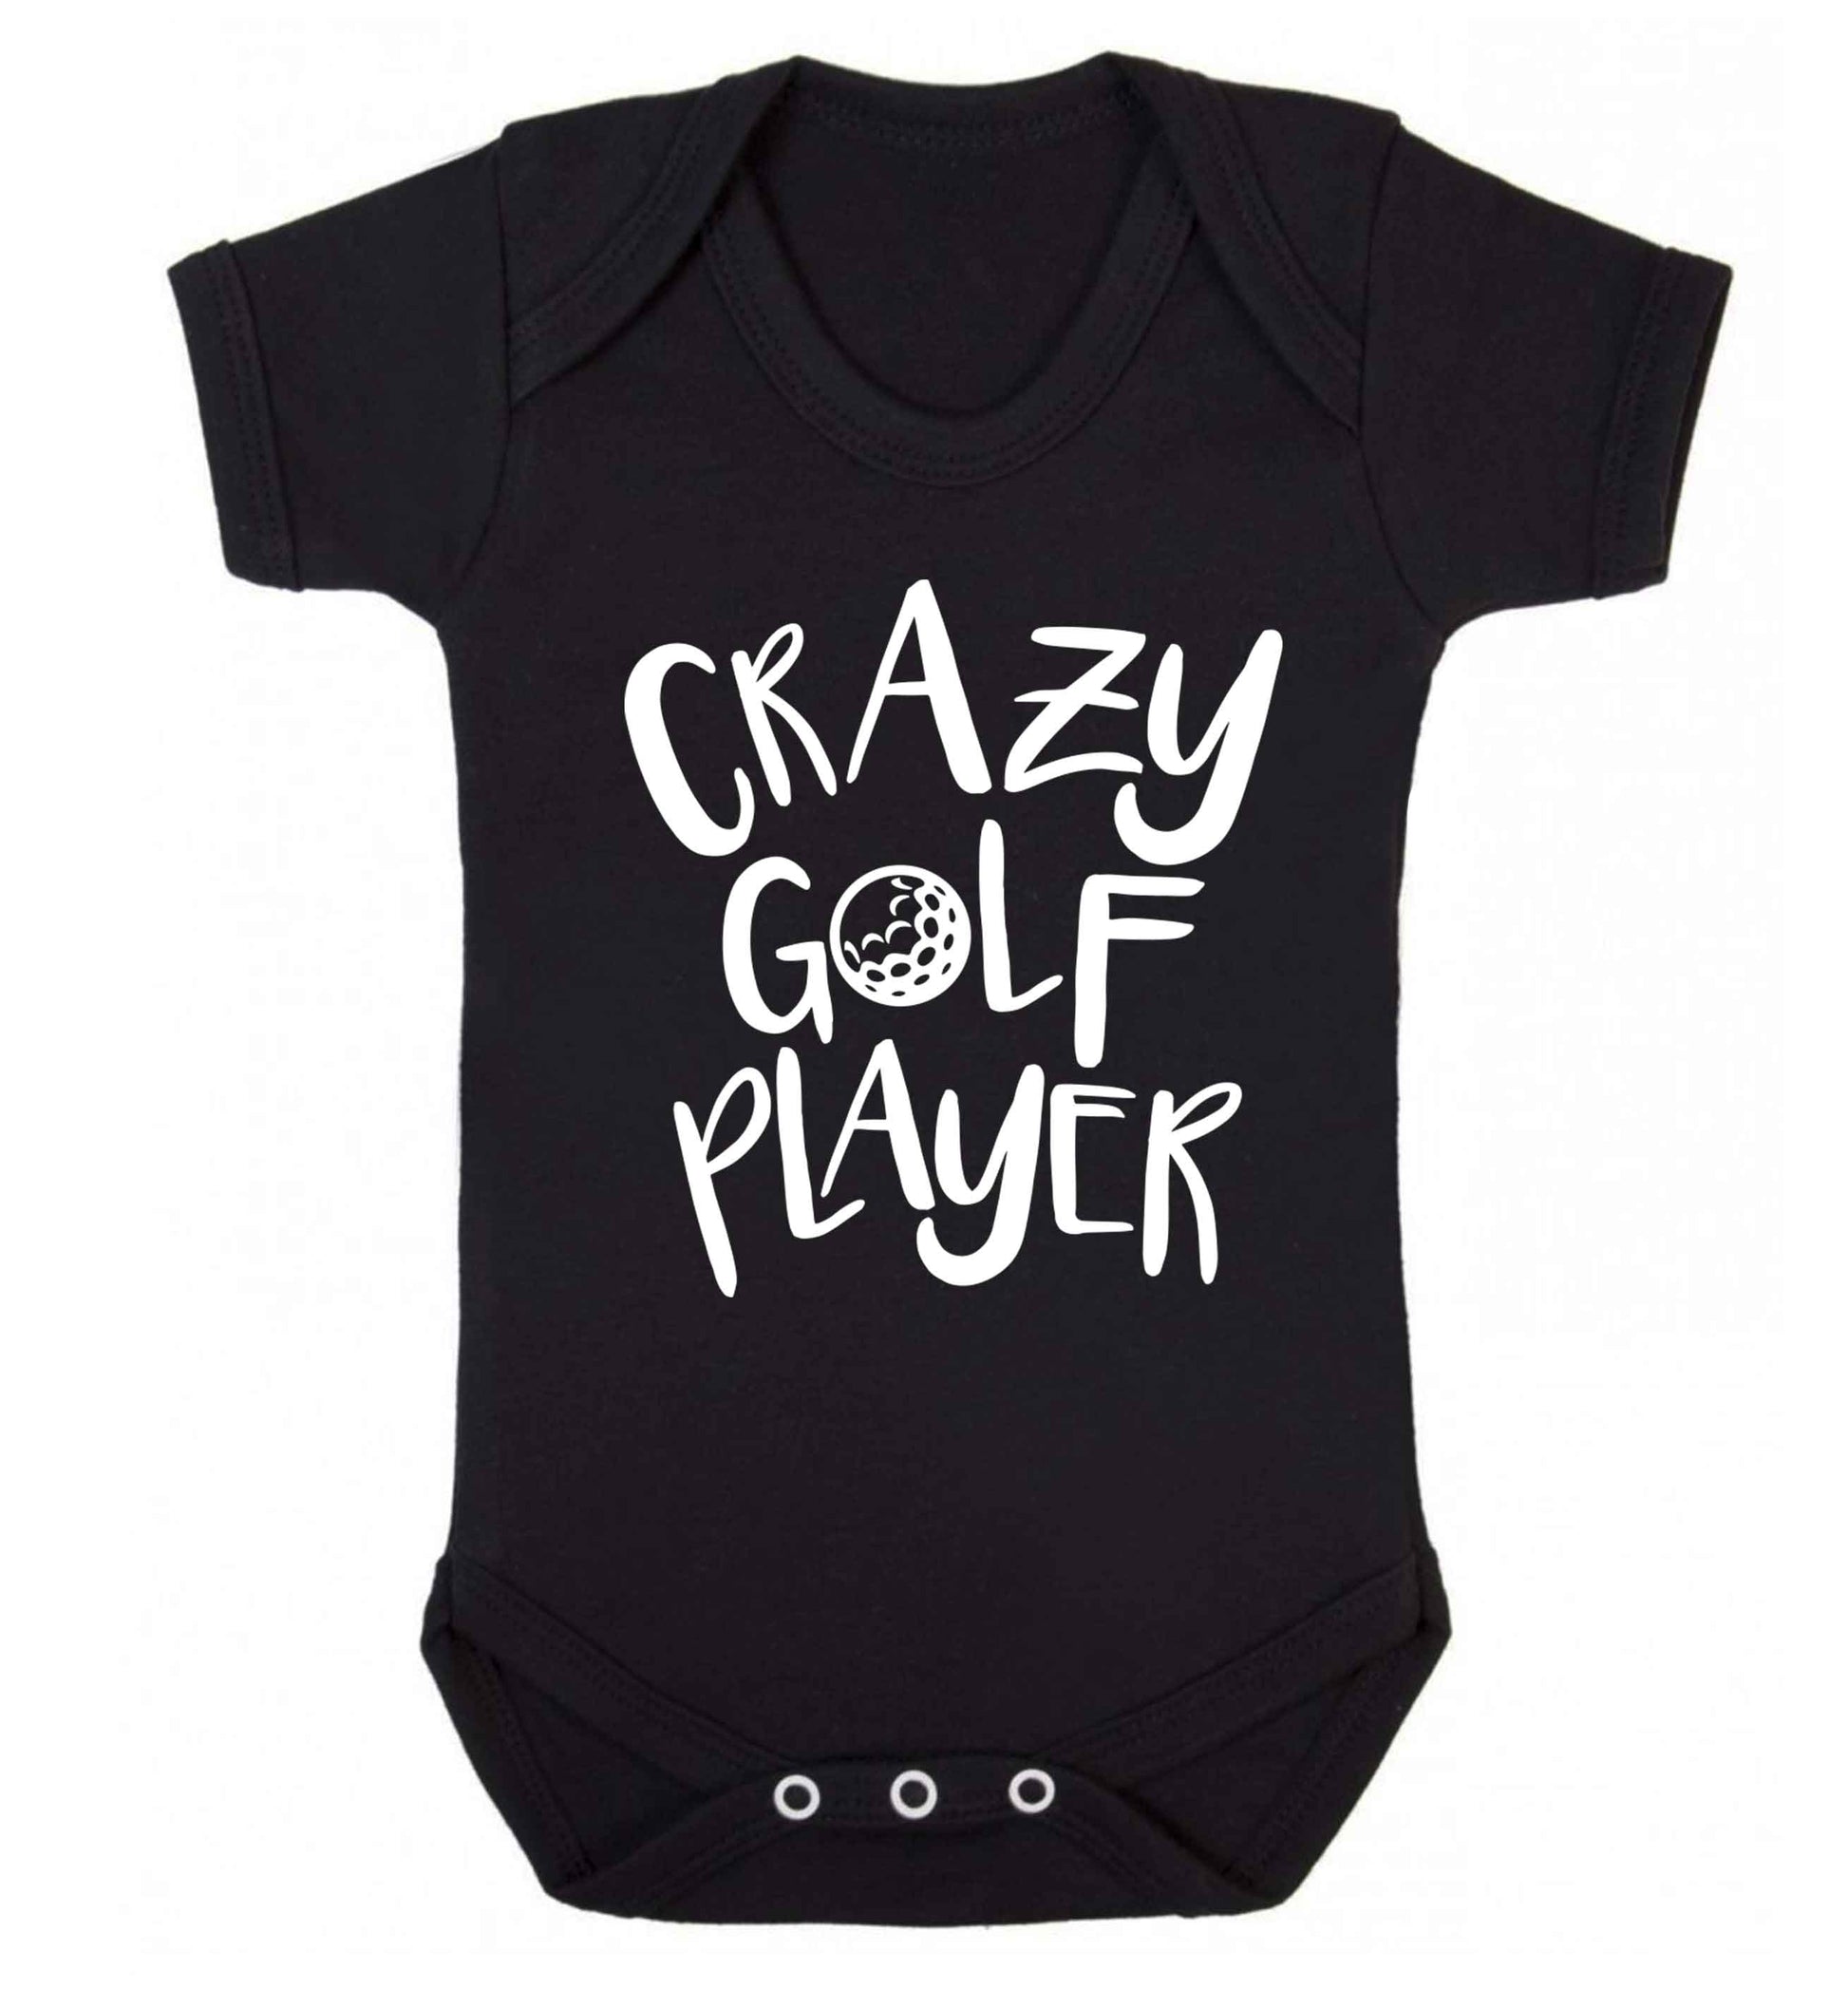 Crazy golf player Baby Vest black 18-24 months